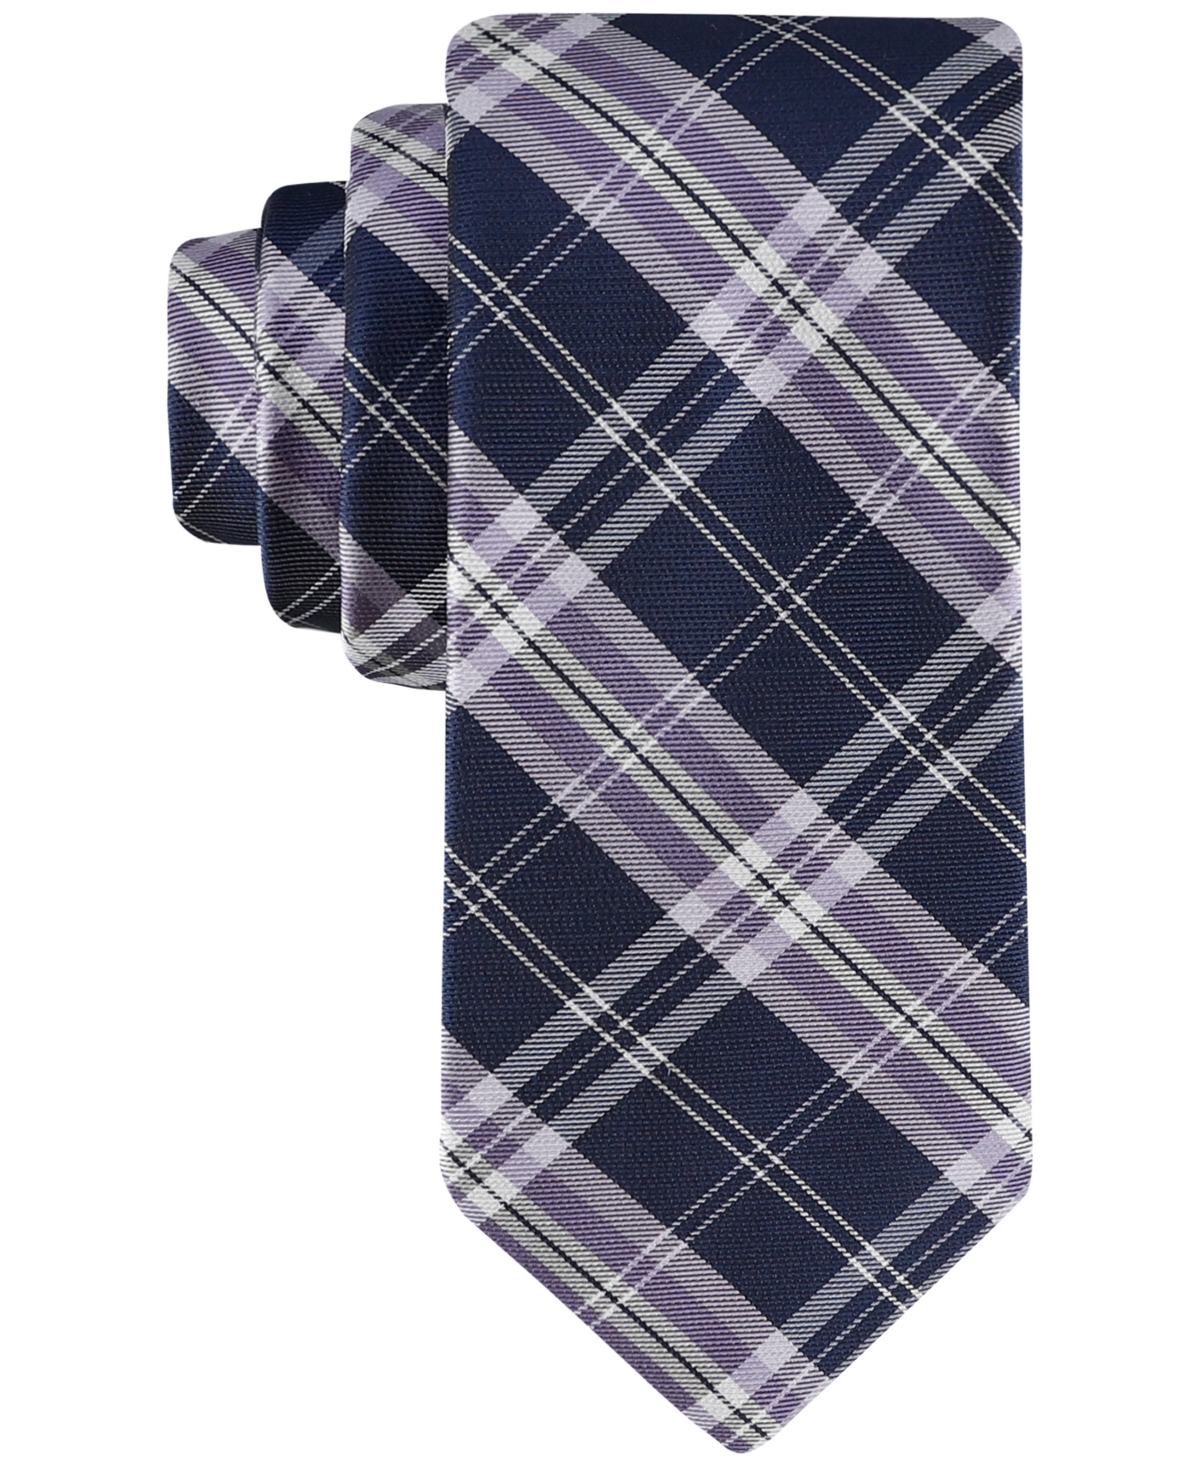 Men's Marley Plaid Tie - Navy Purple